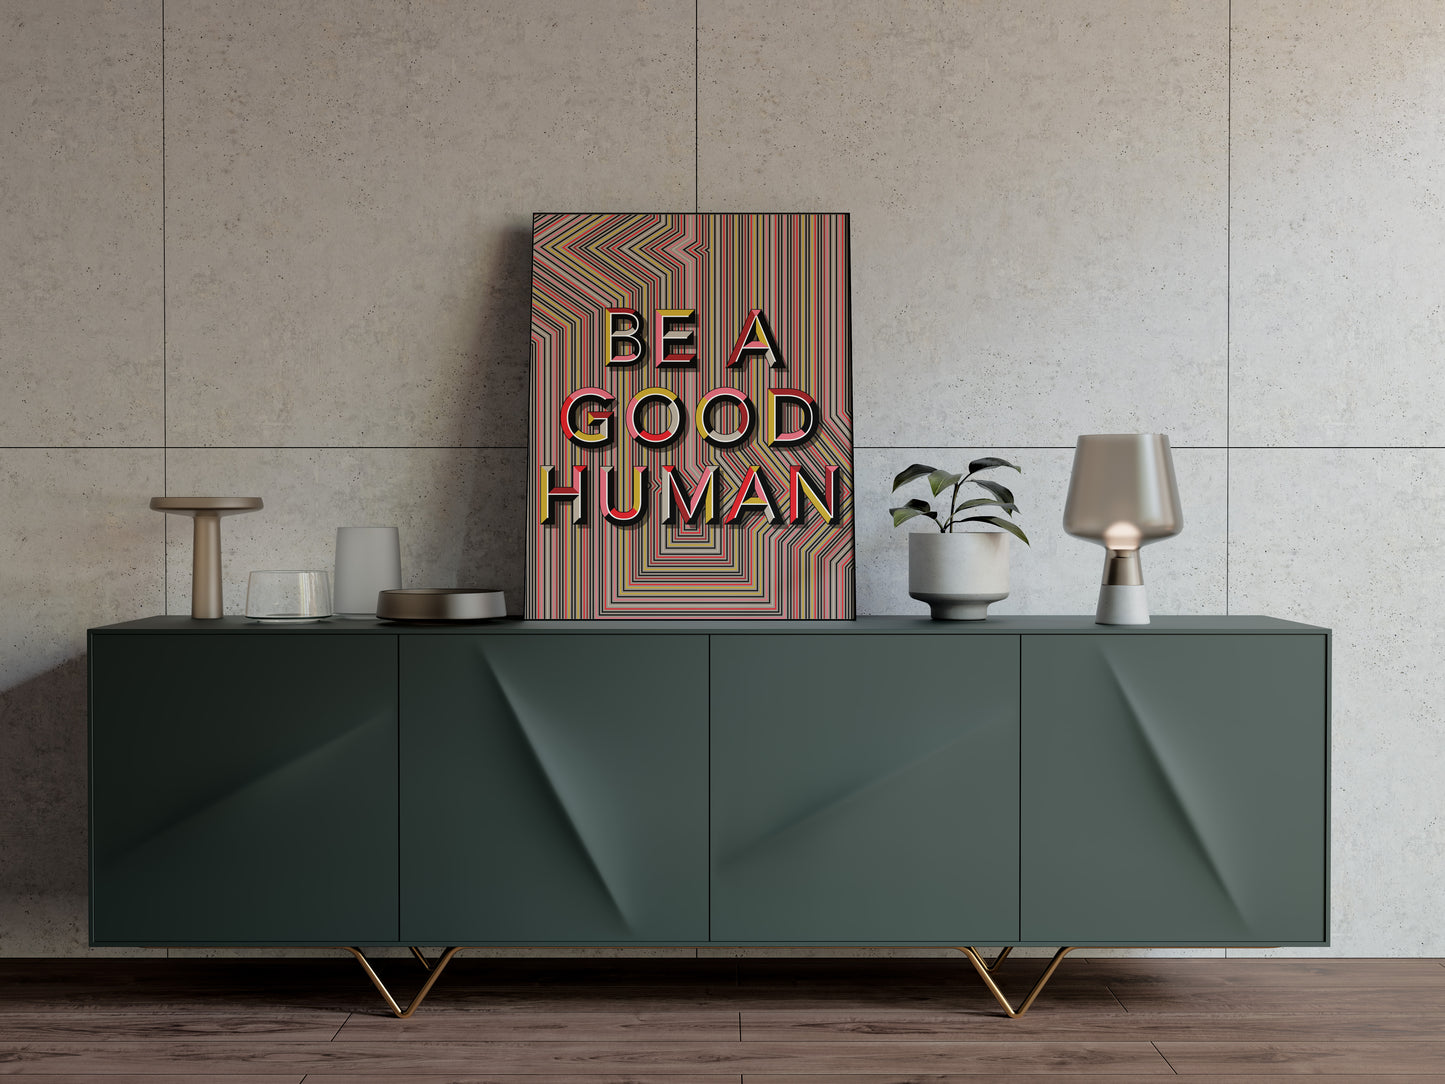 Be A Good Human